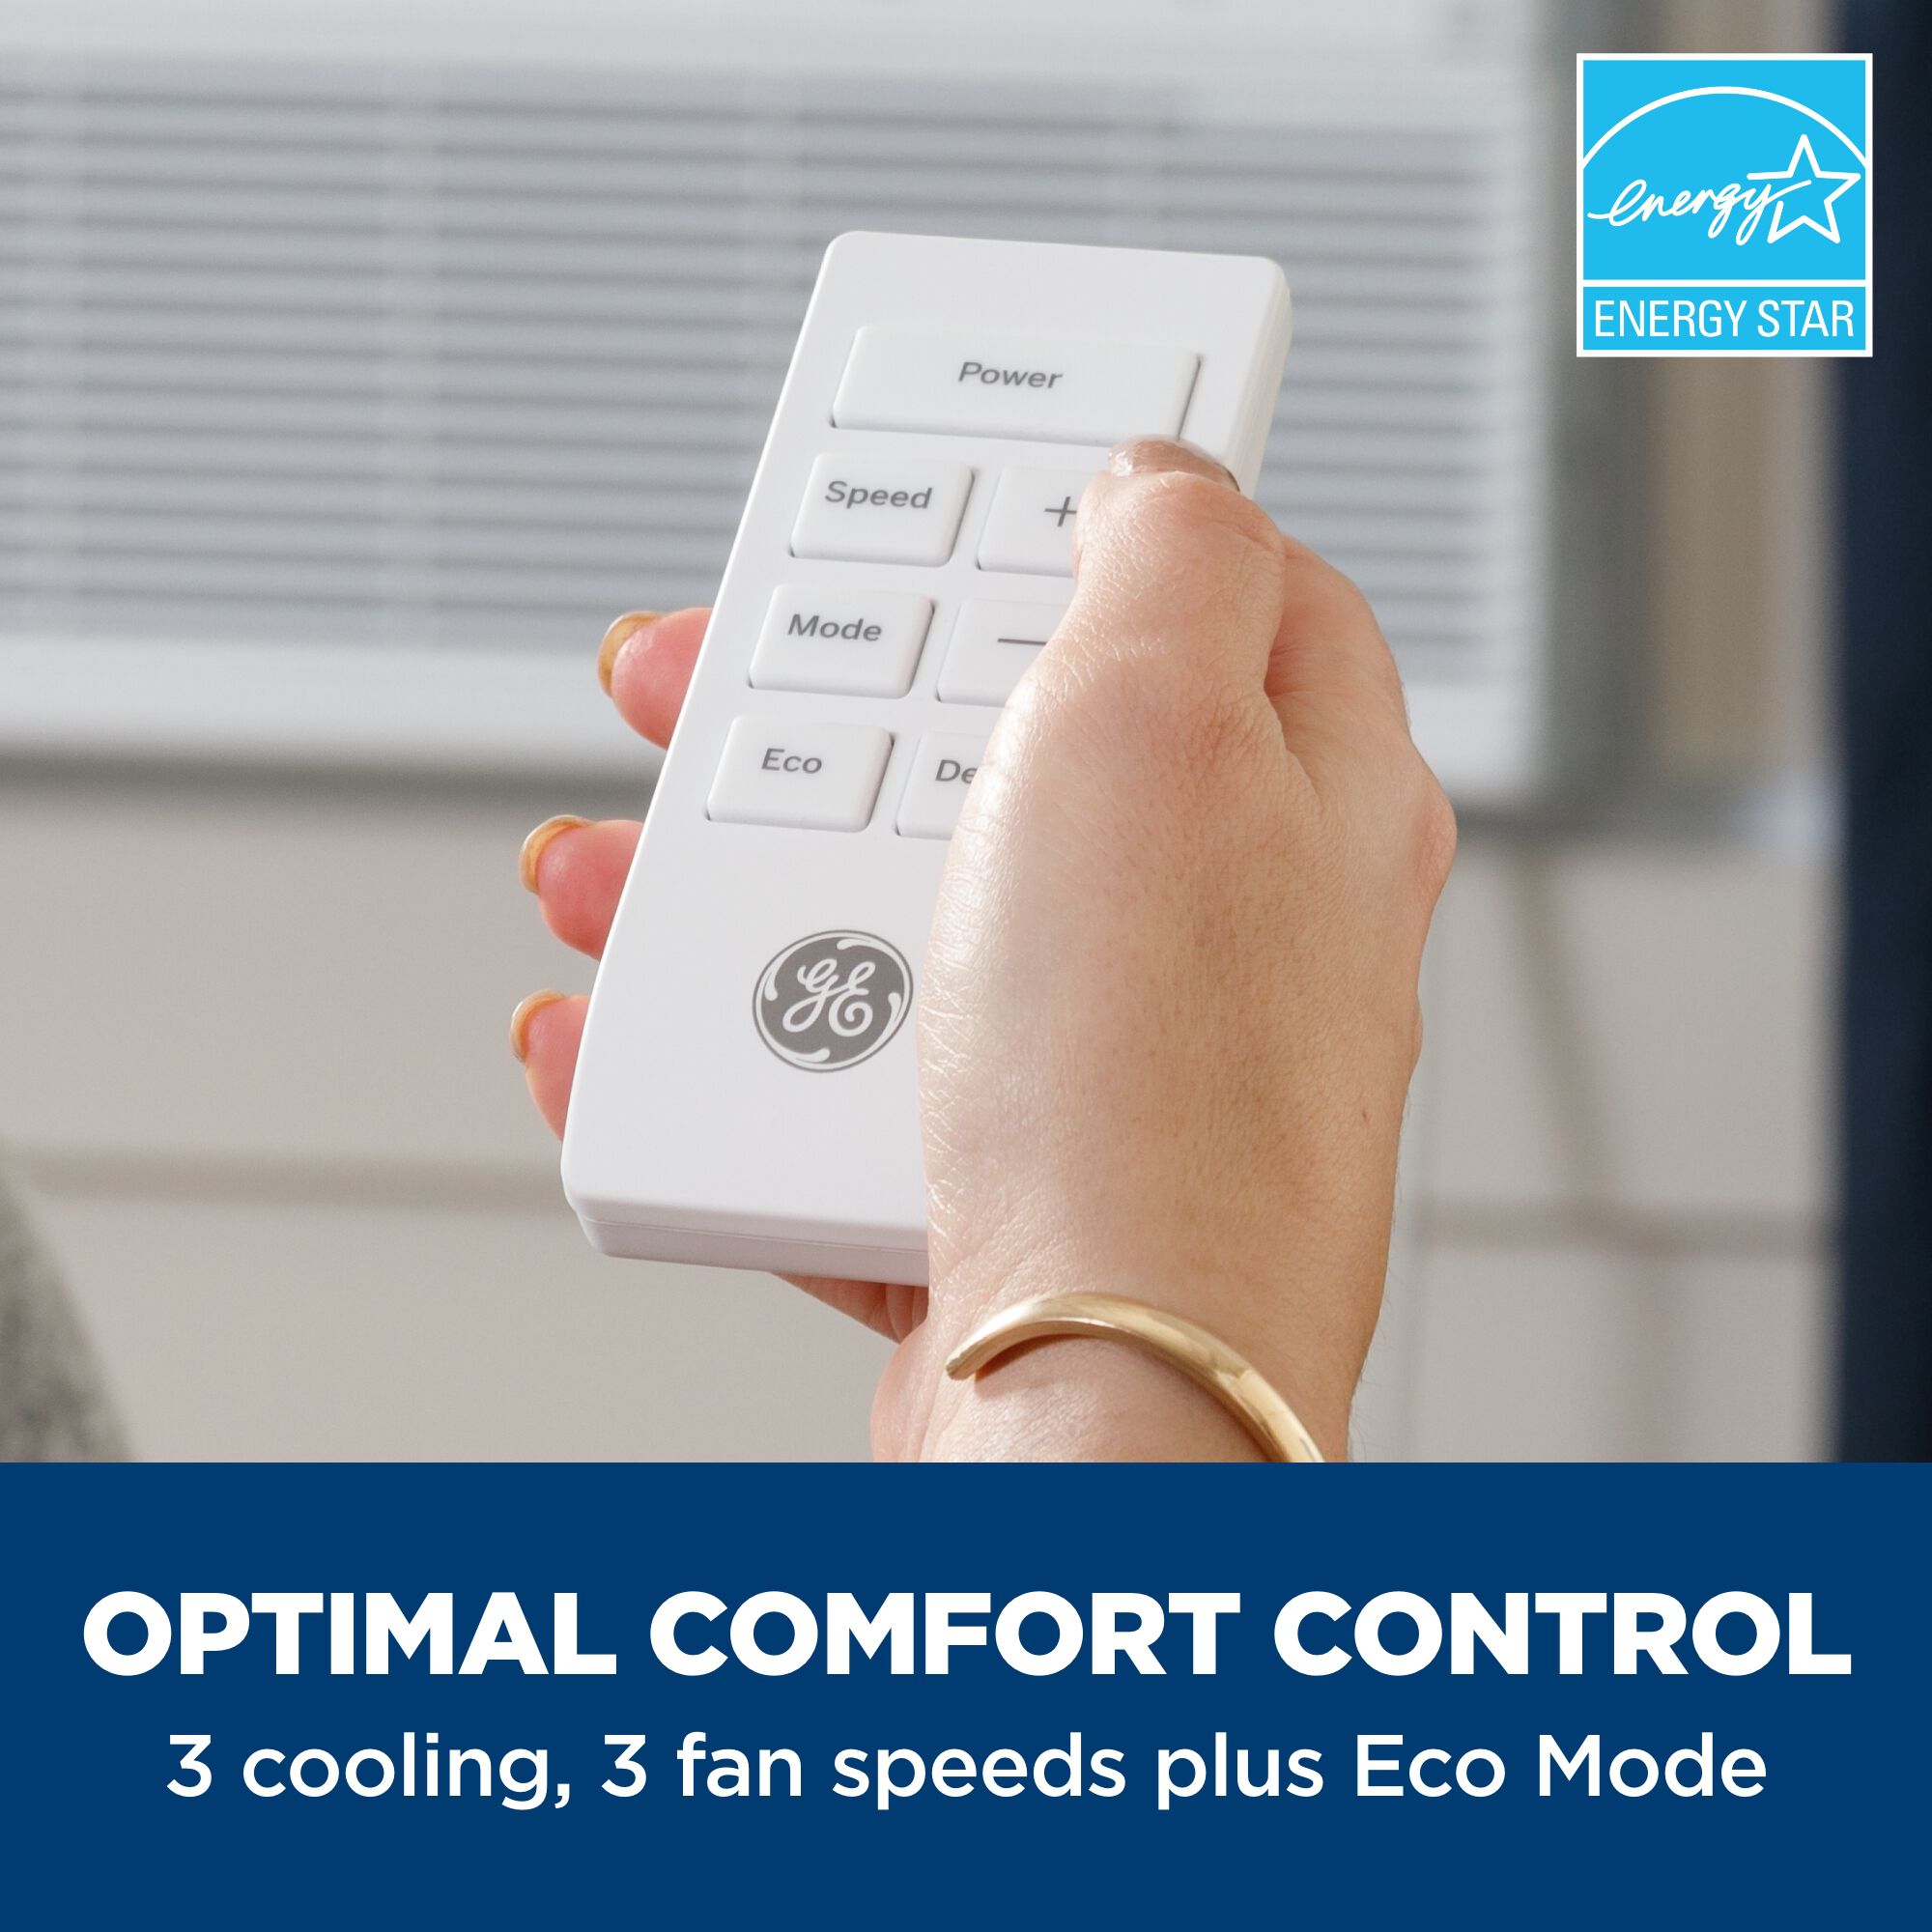 GE 8,000 BTU Smart Energy Star Window Air Conditioner with 3 Fan Speeds,  Sleep Mode & Remote Control - White